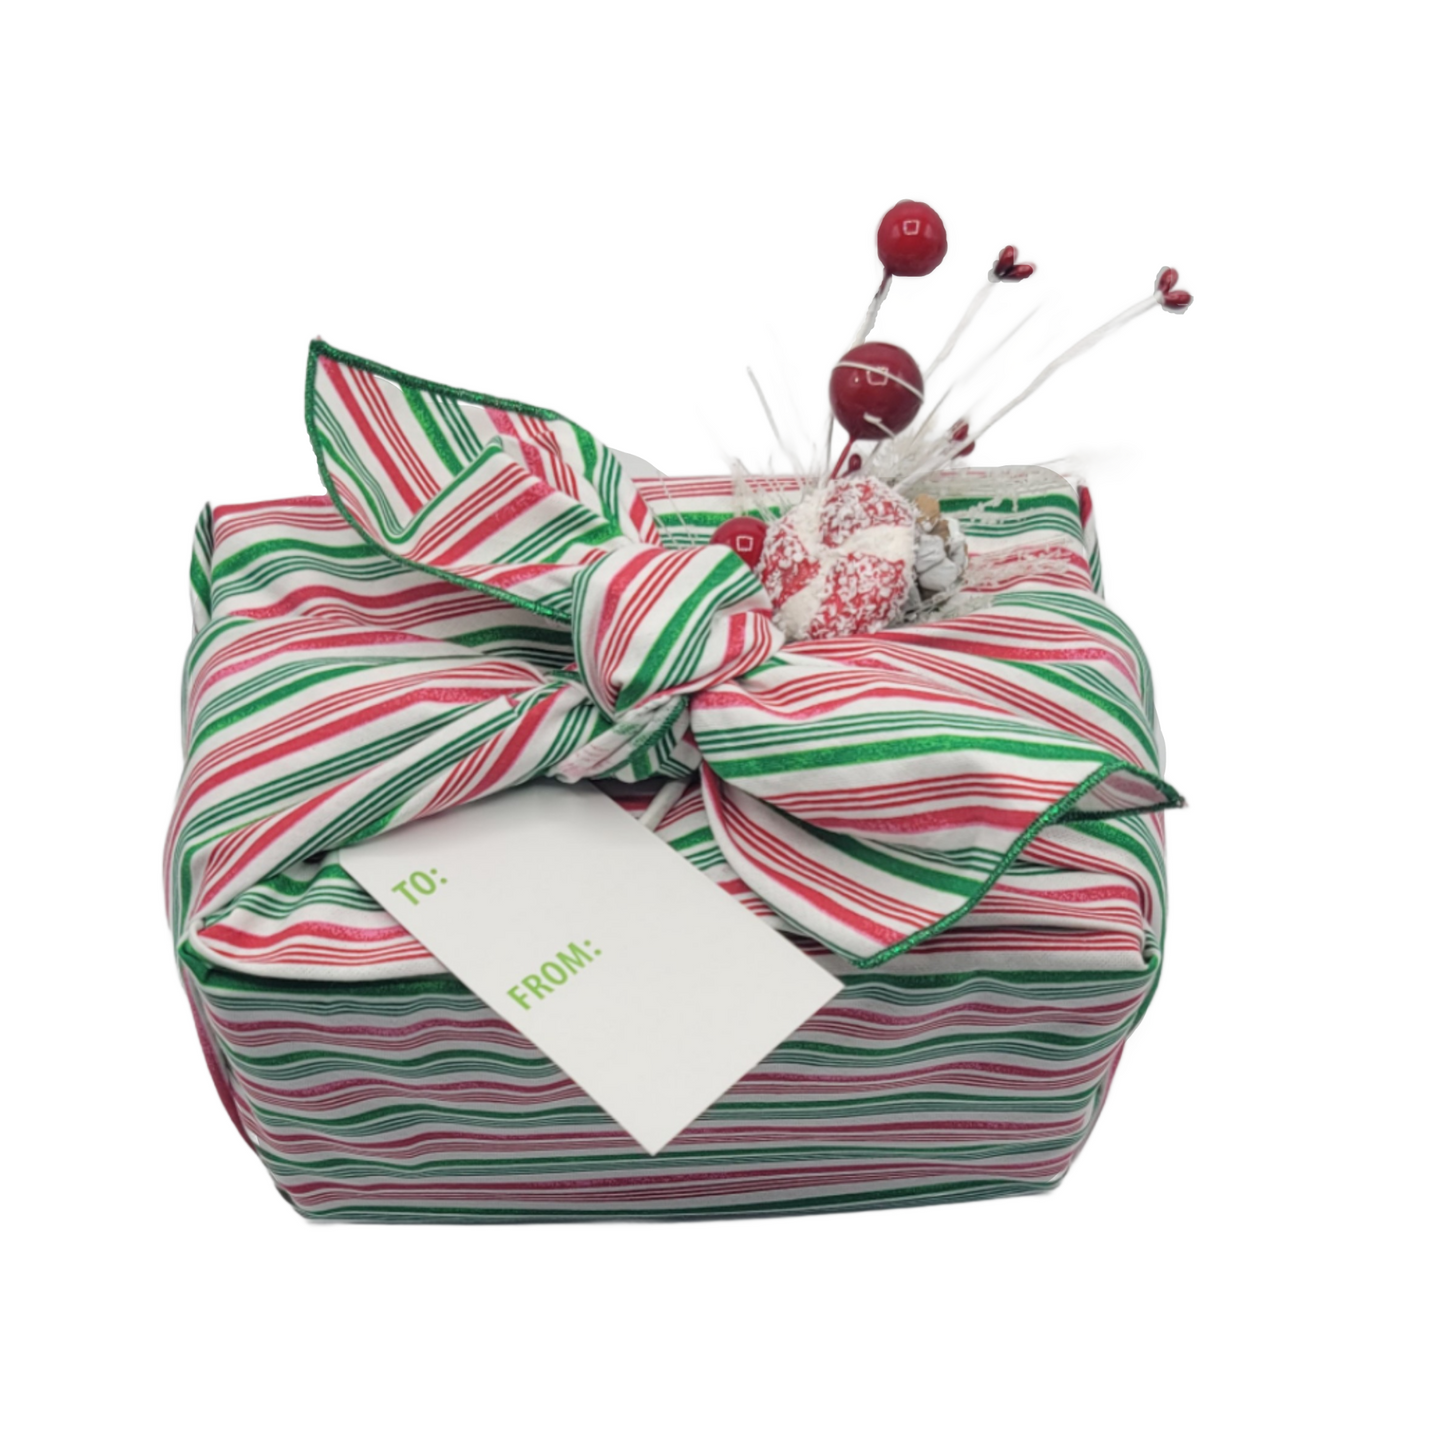 Furoshiki 3 pc Fabric Gift Wrap Kit - Holiday/Red Green and White Stripe